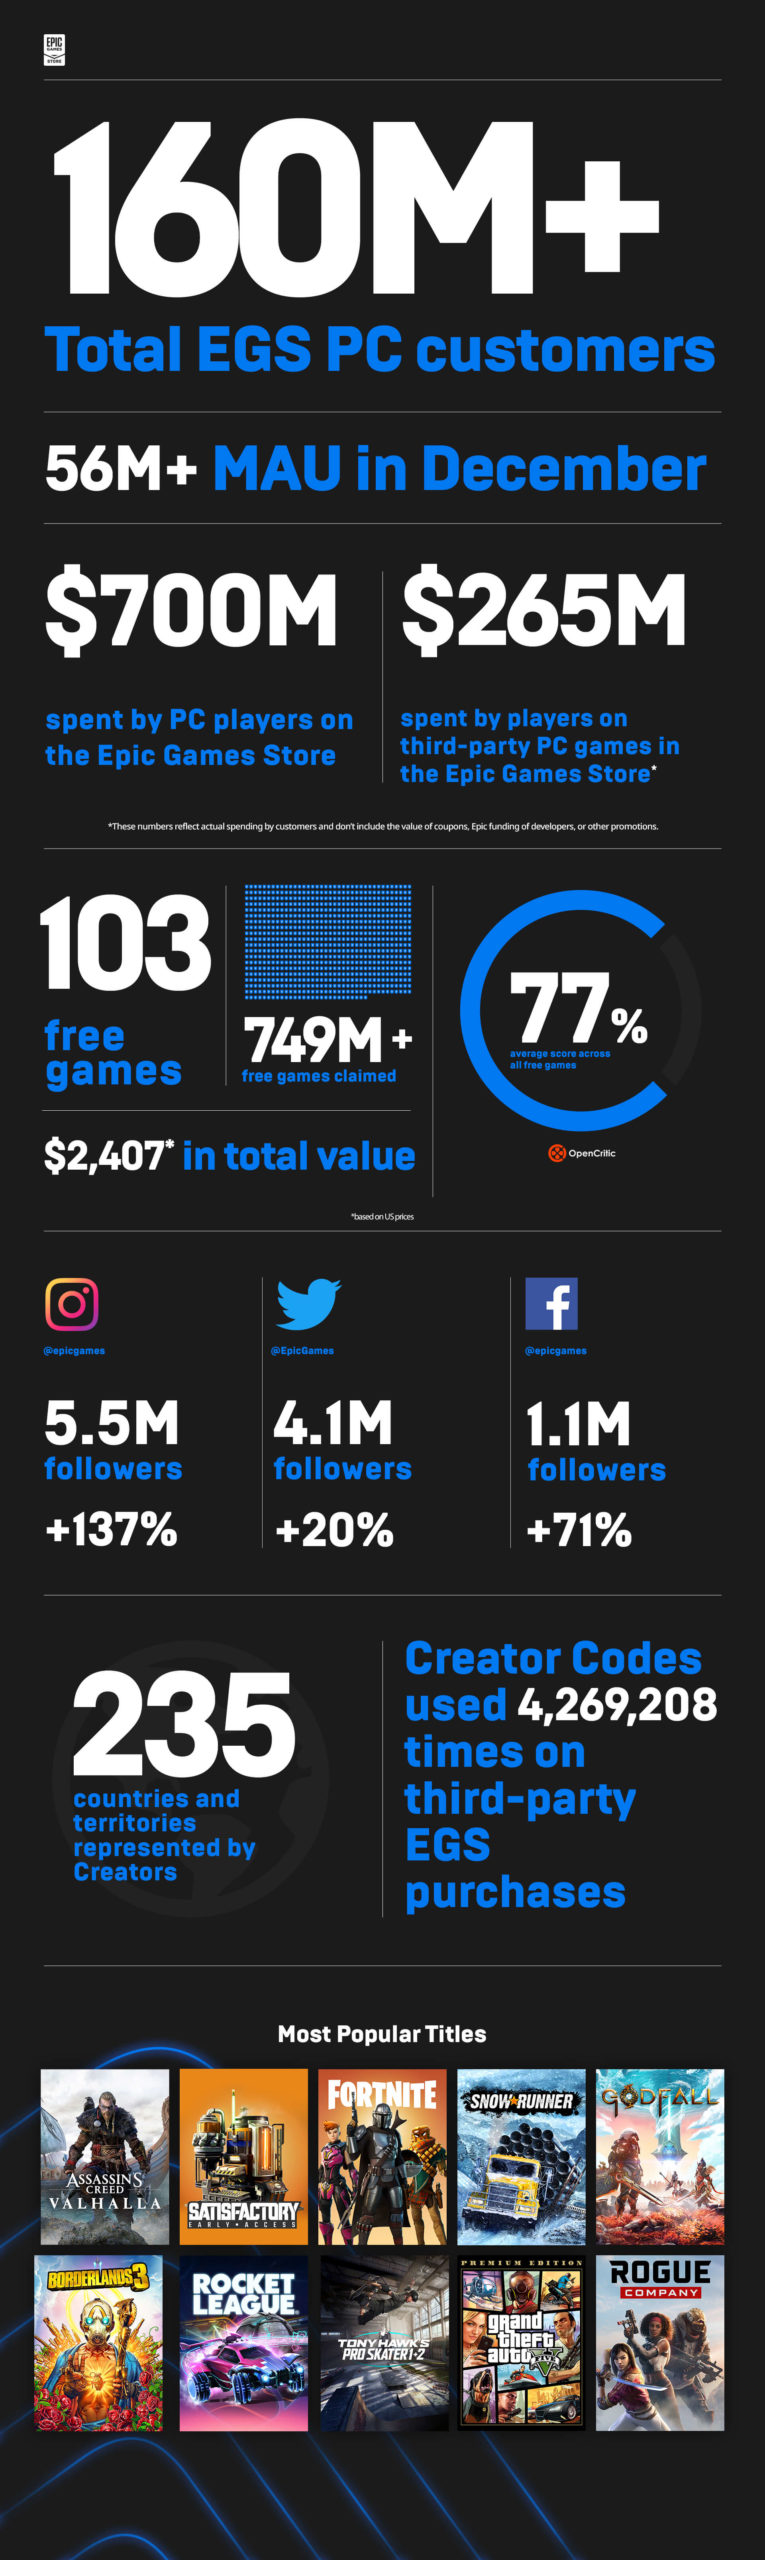 Růst Epic Games Store v roce 2020 epicgamesreview scaled